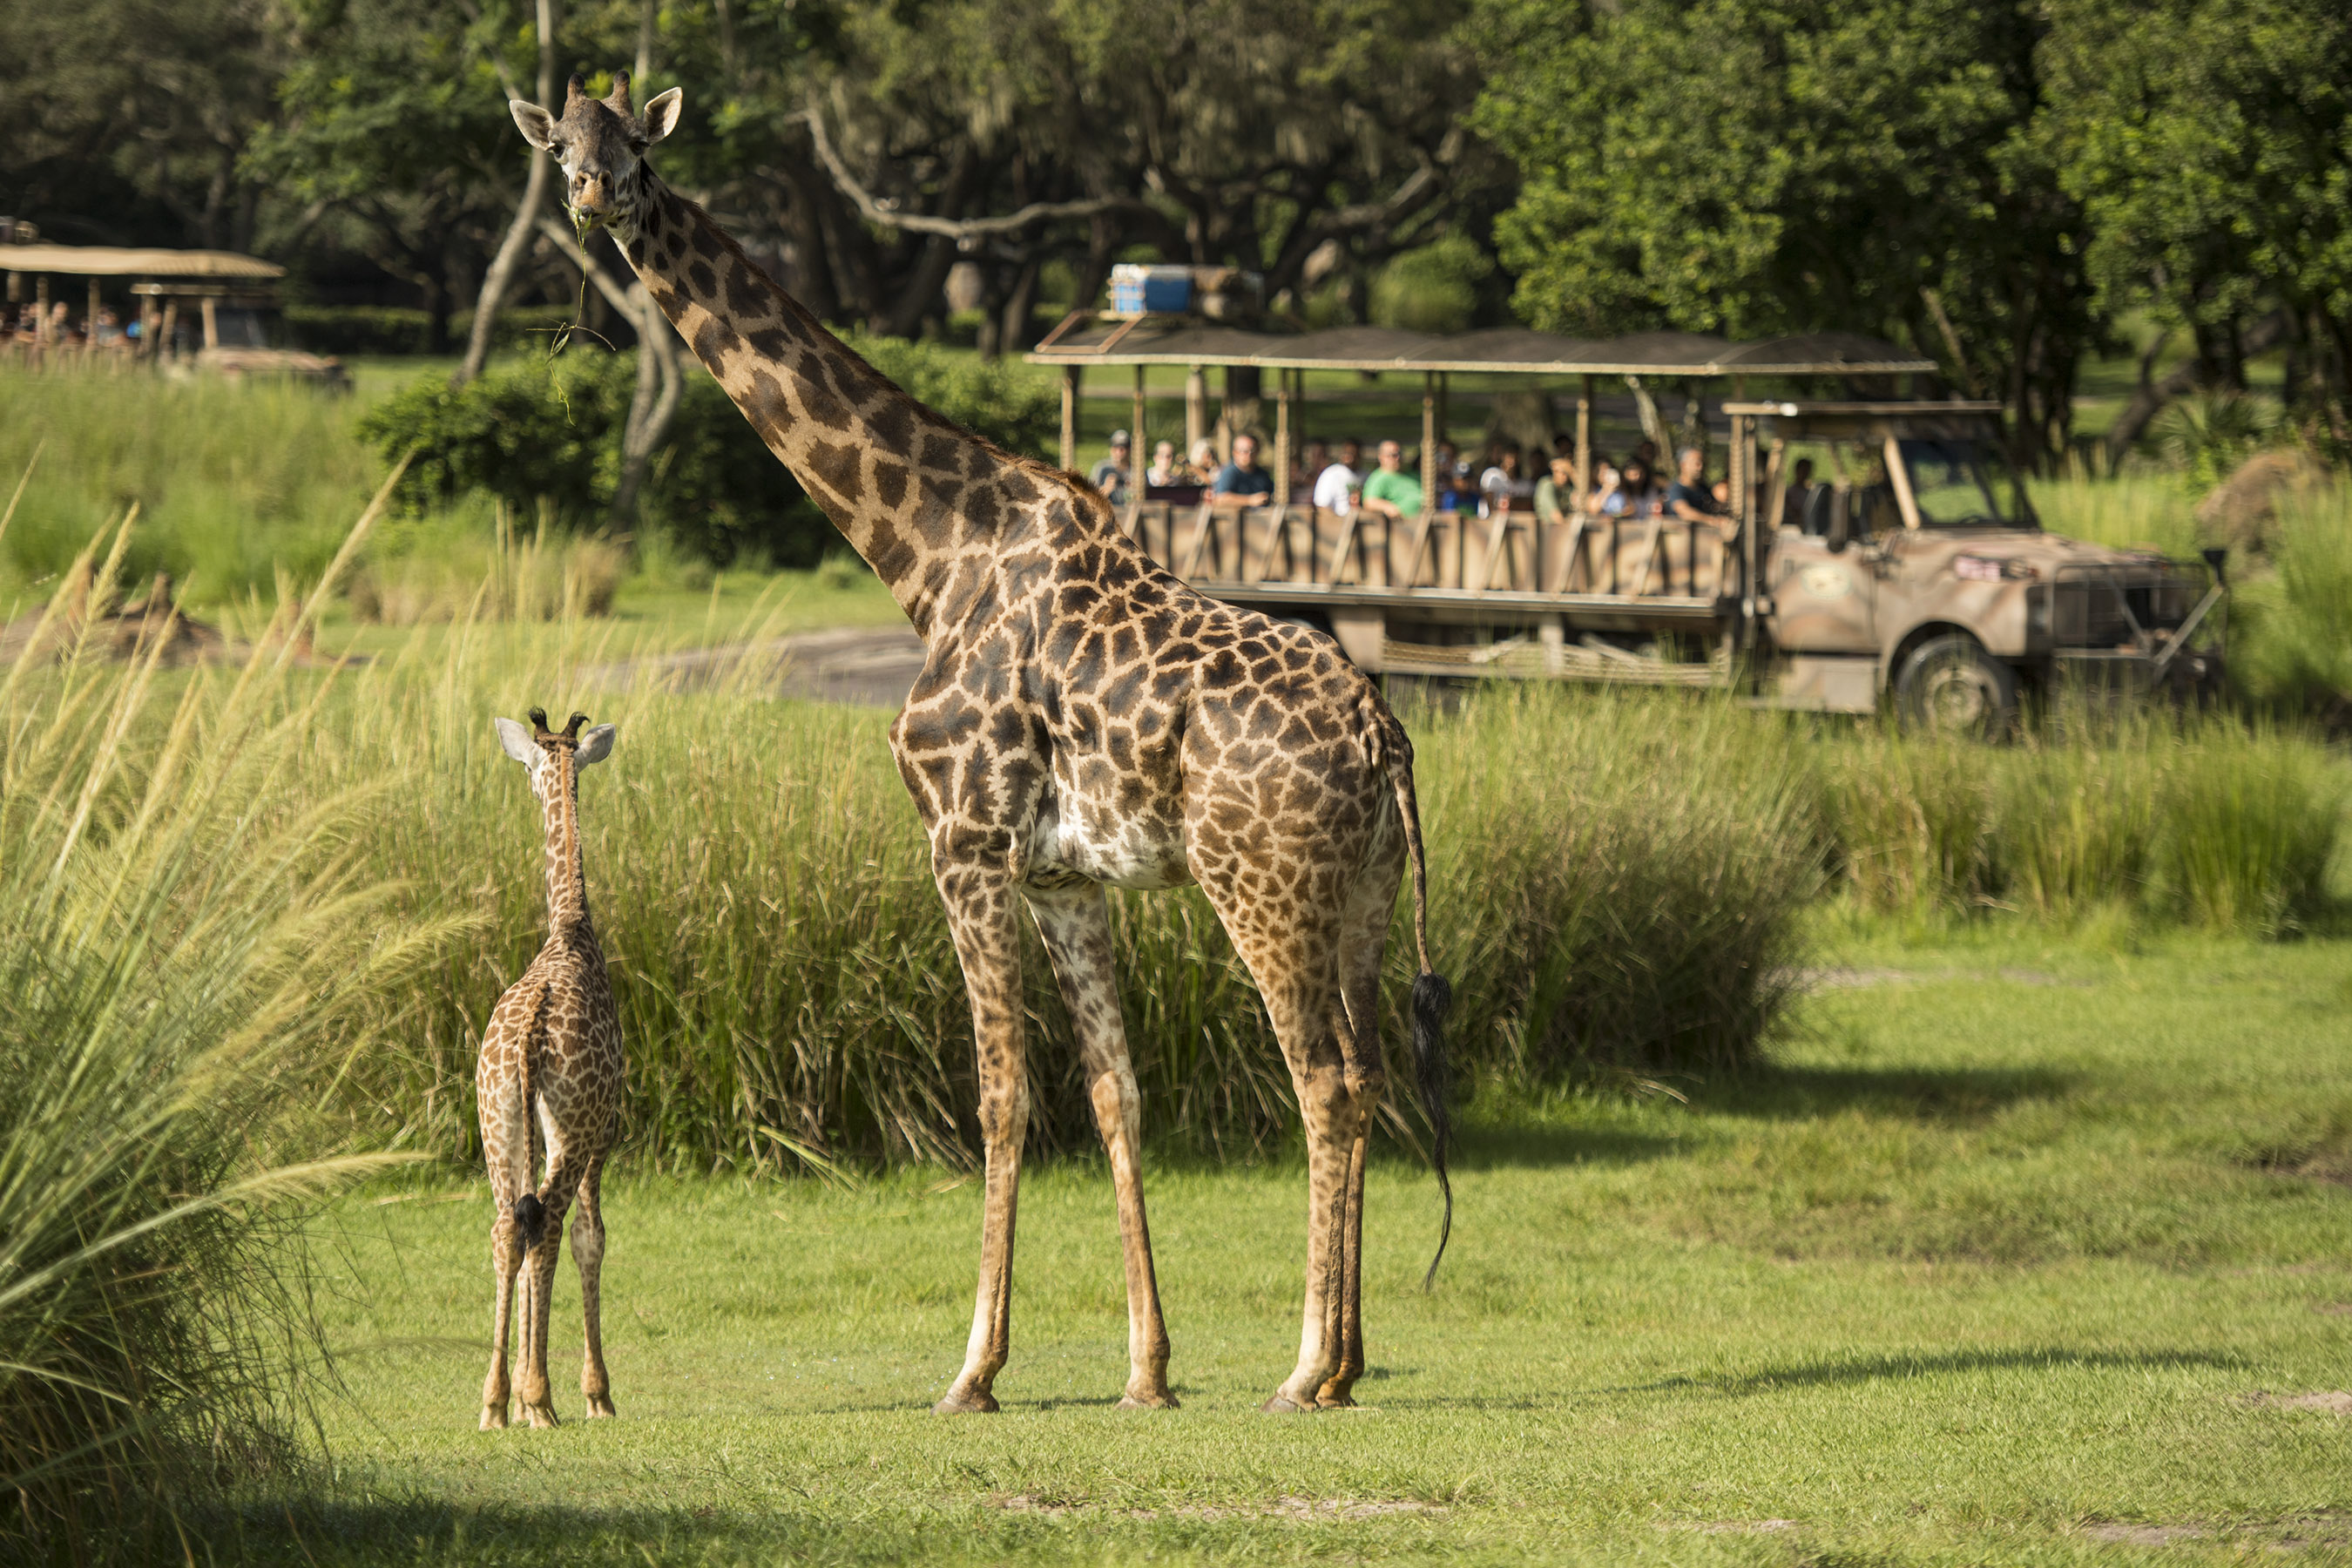 Aella the Masai giraffe calf